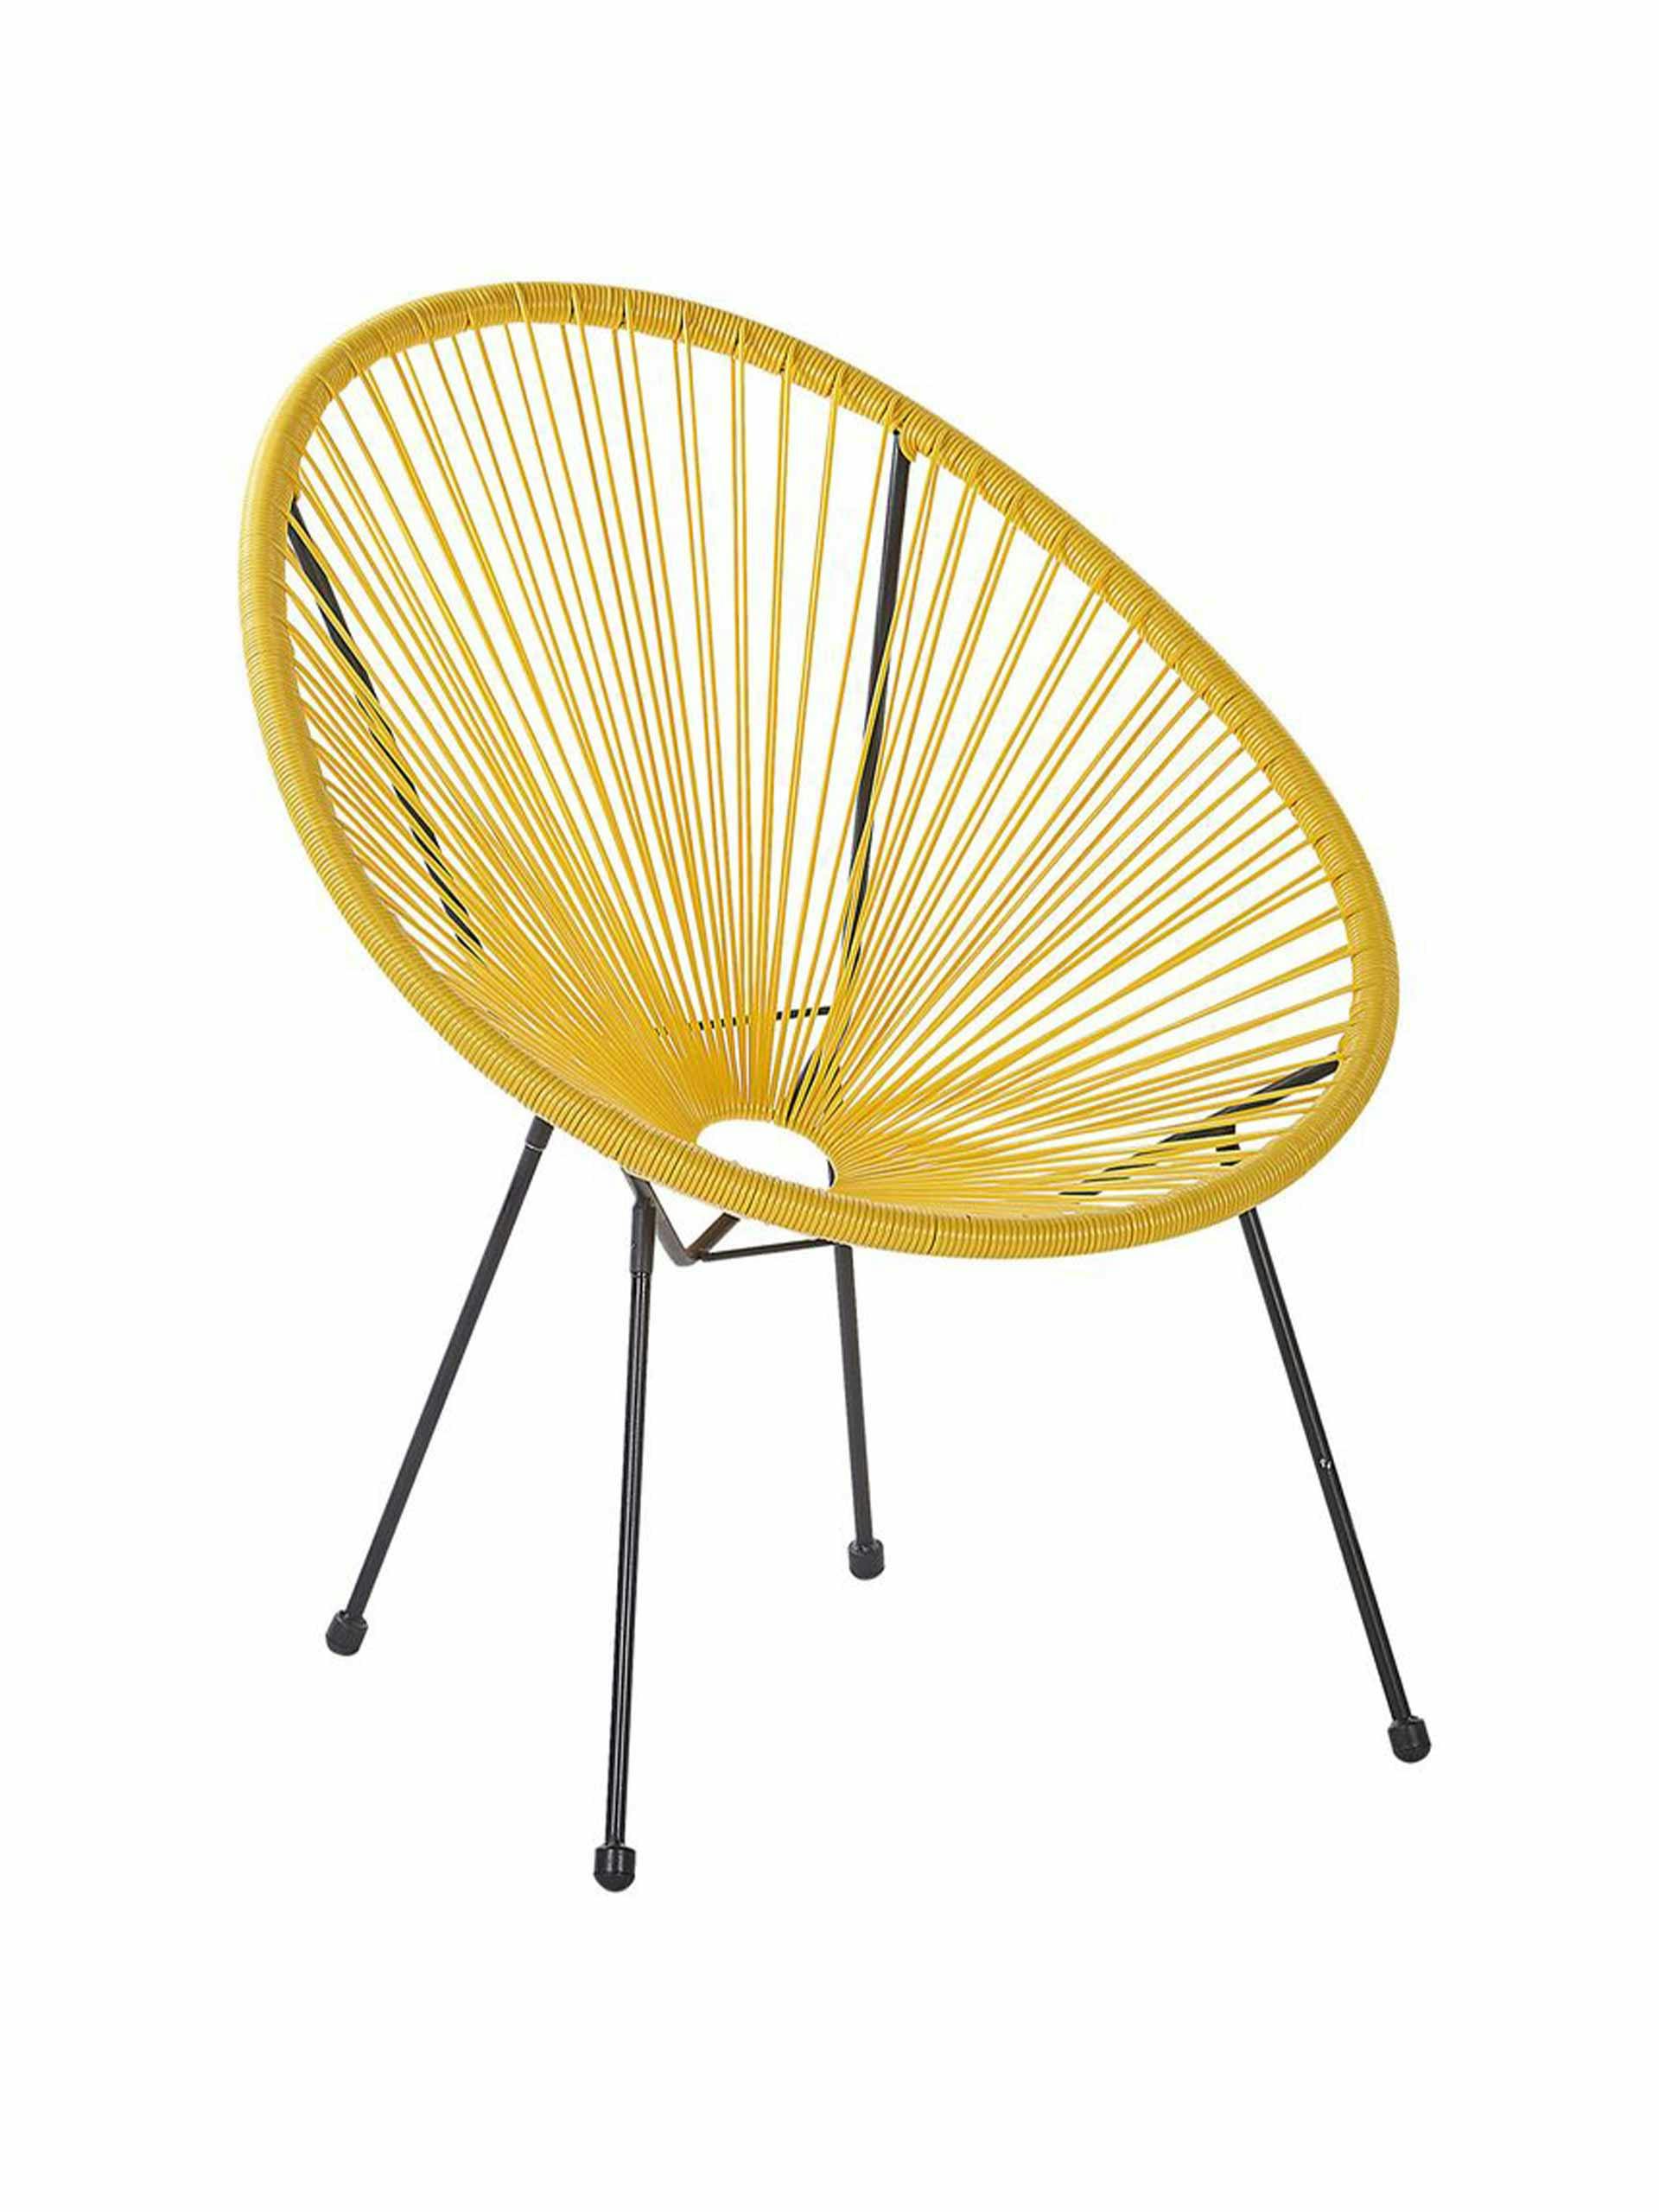 Set of 2 yellow rattan chairs